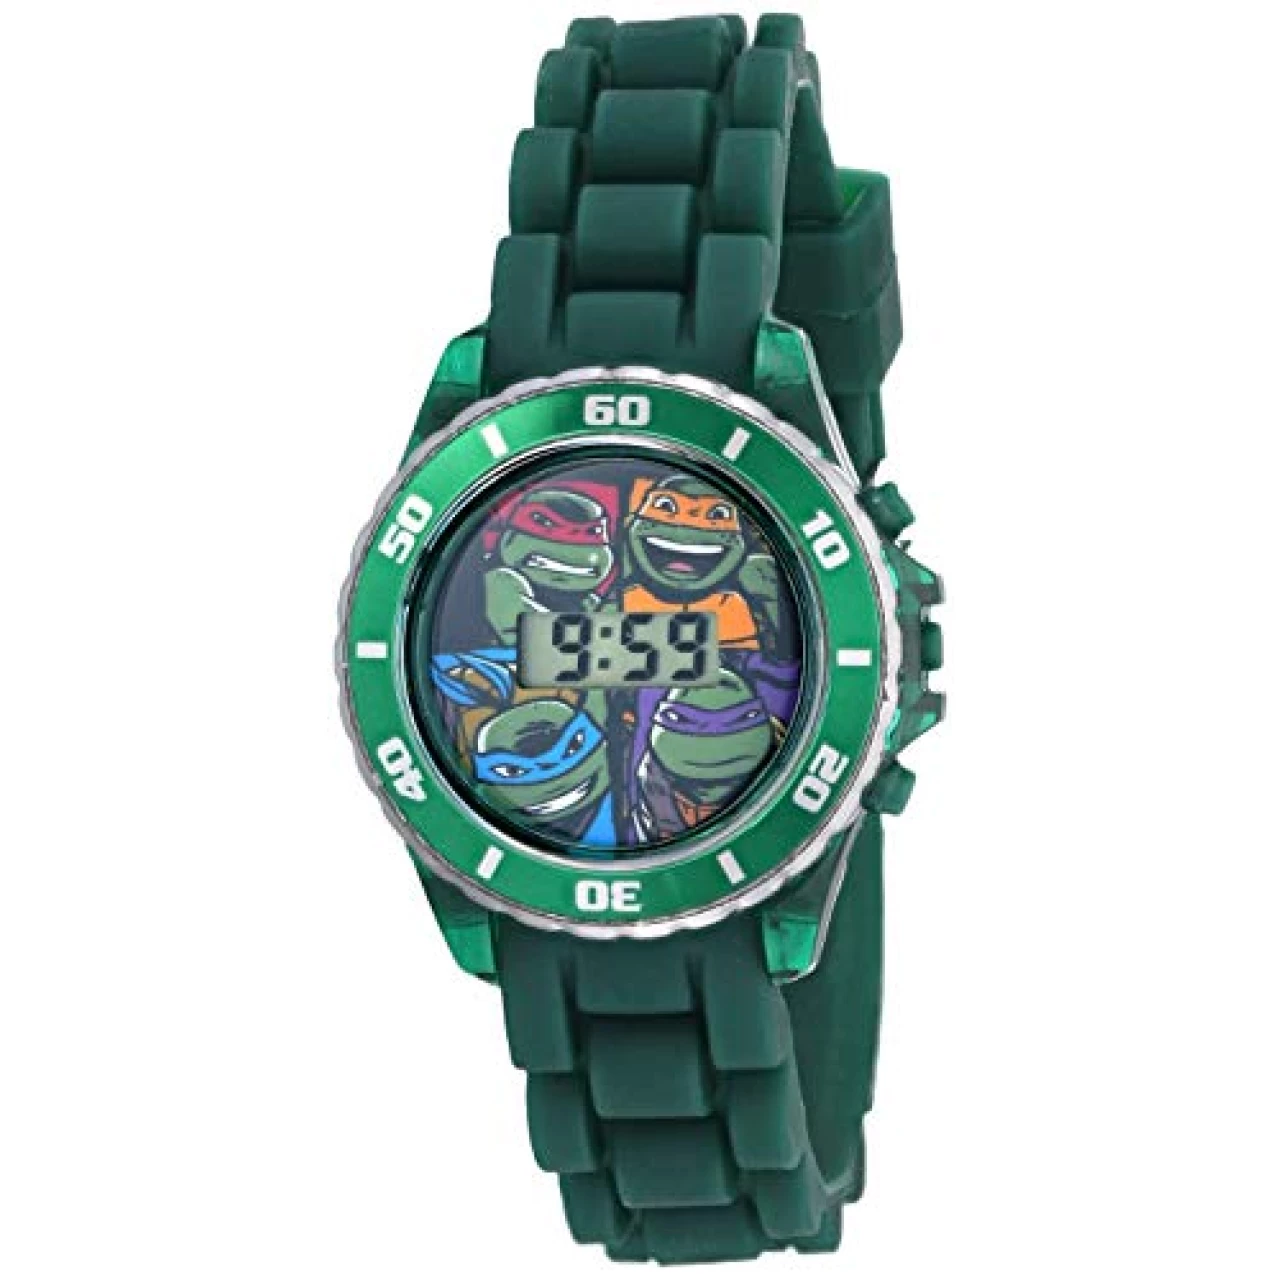 Ninja Turtles Kids&rsquo; Digital Watch with Matallic Green Bezel, Flashing LED Lights, Green Strap - with Teenage Mutant Ninja Turtles on the Dial, Safe for Children - Model: TMN4008